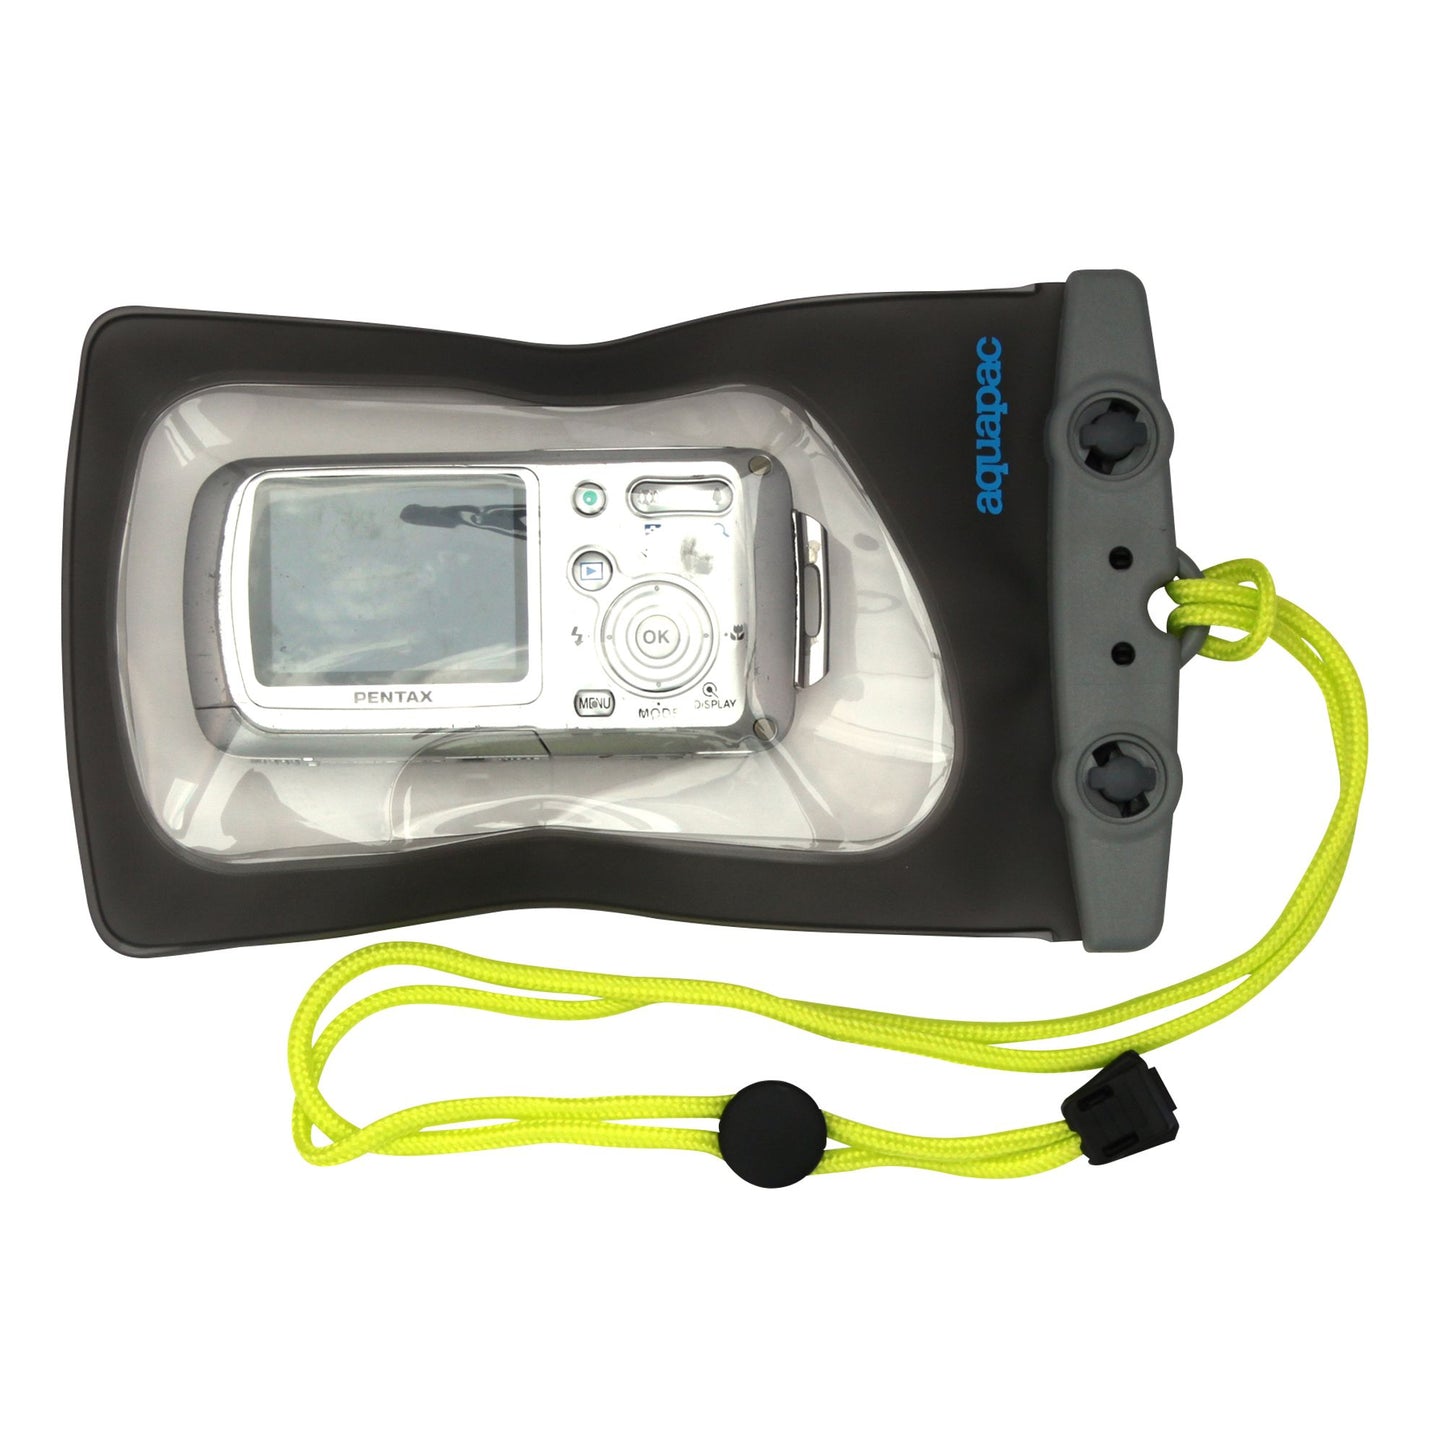 An Aquapac waterproof mini camera case for a small digital camera.